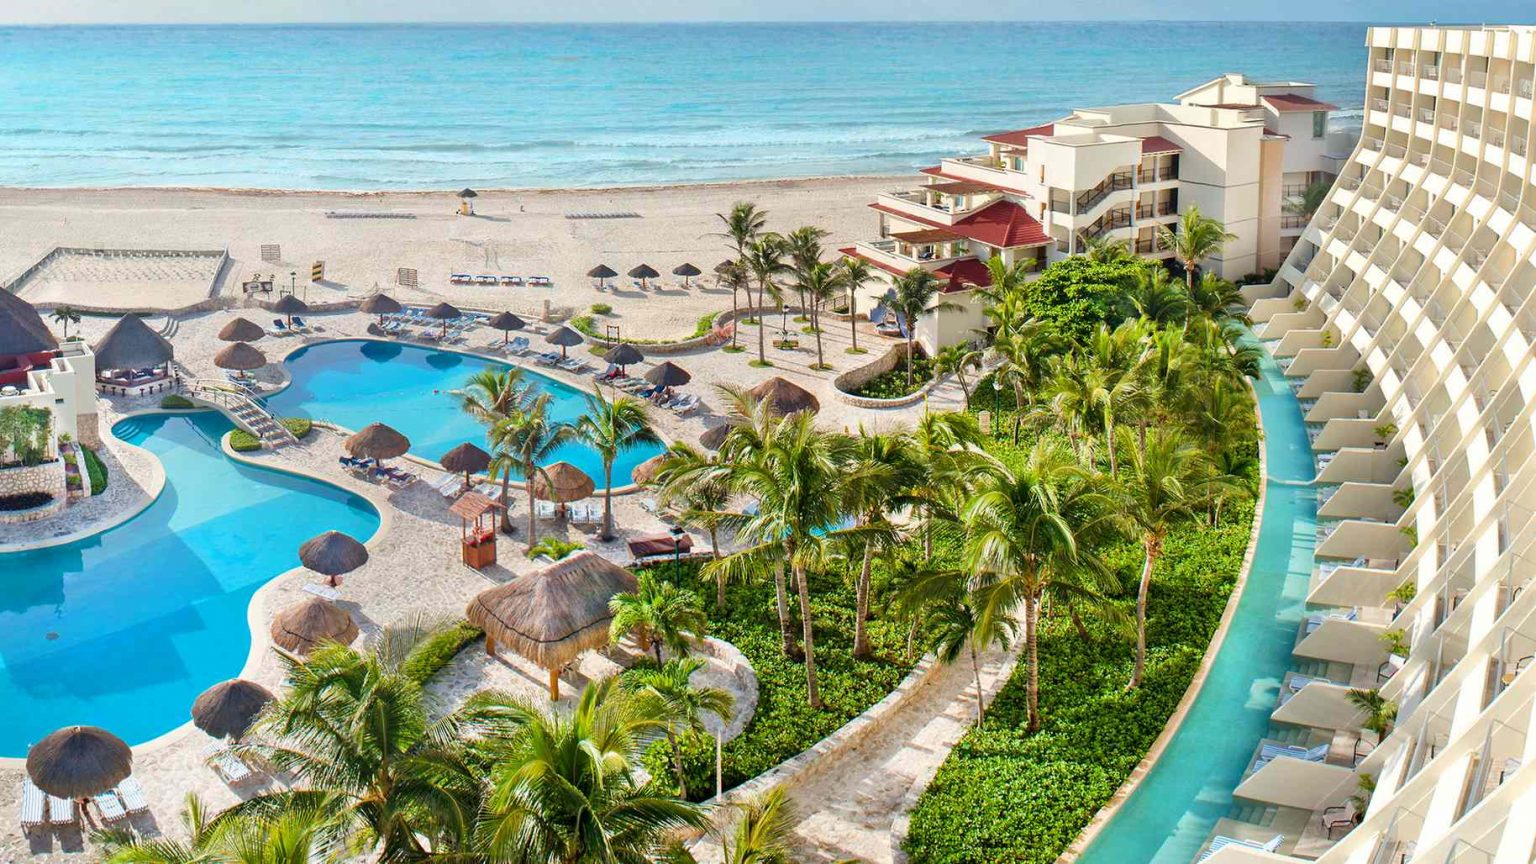 oyal-holiday-hotel-resort-swim-up-grand-park-royal-cancun-caribe-mexico-quintana-roo-cancun-1536x864